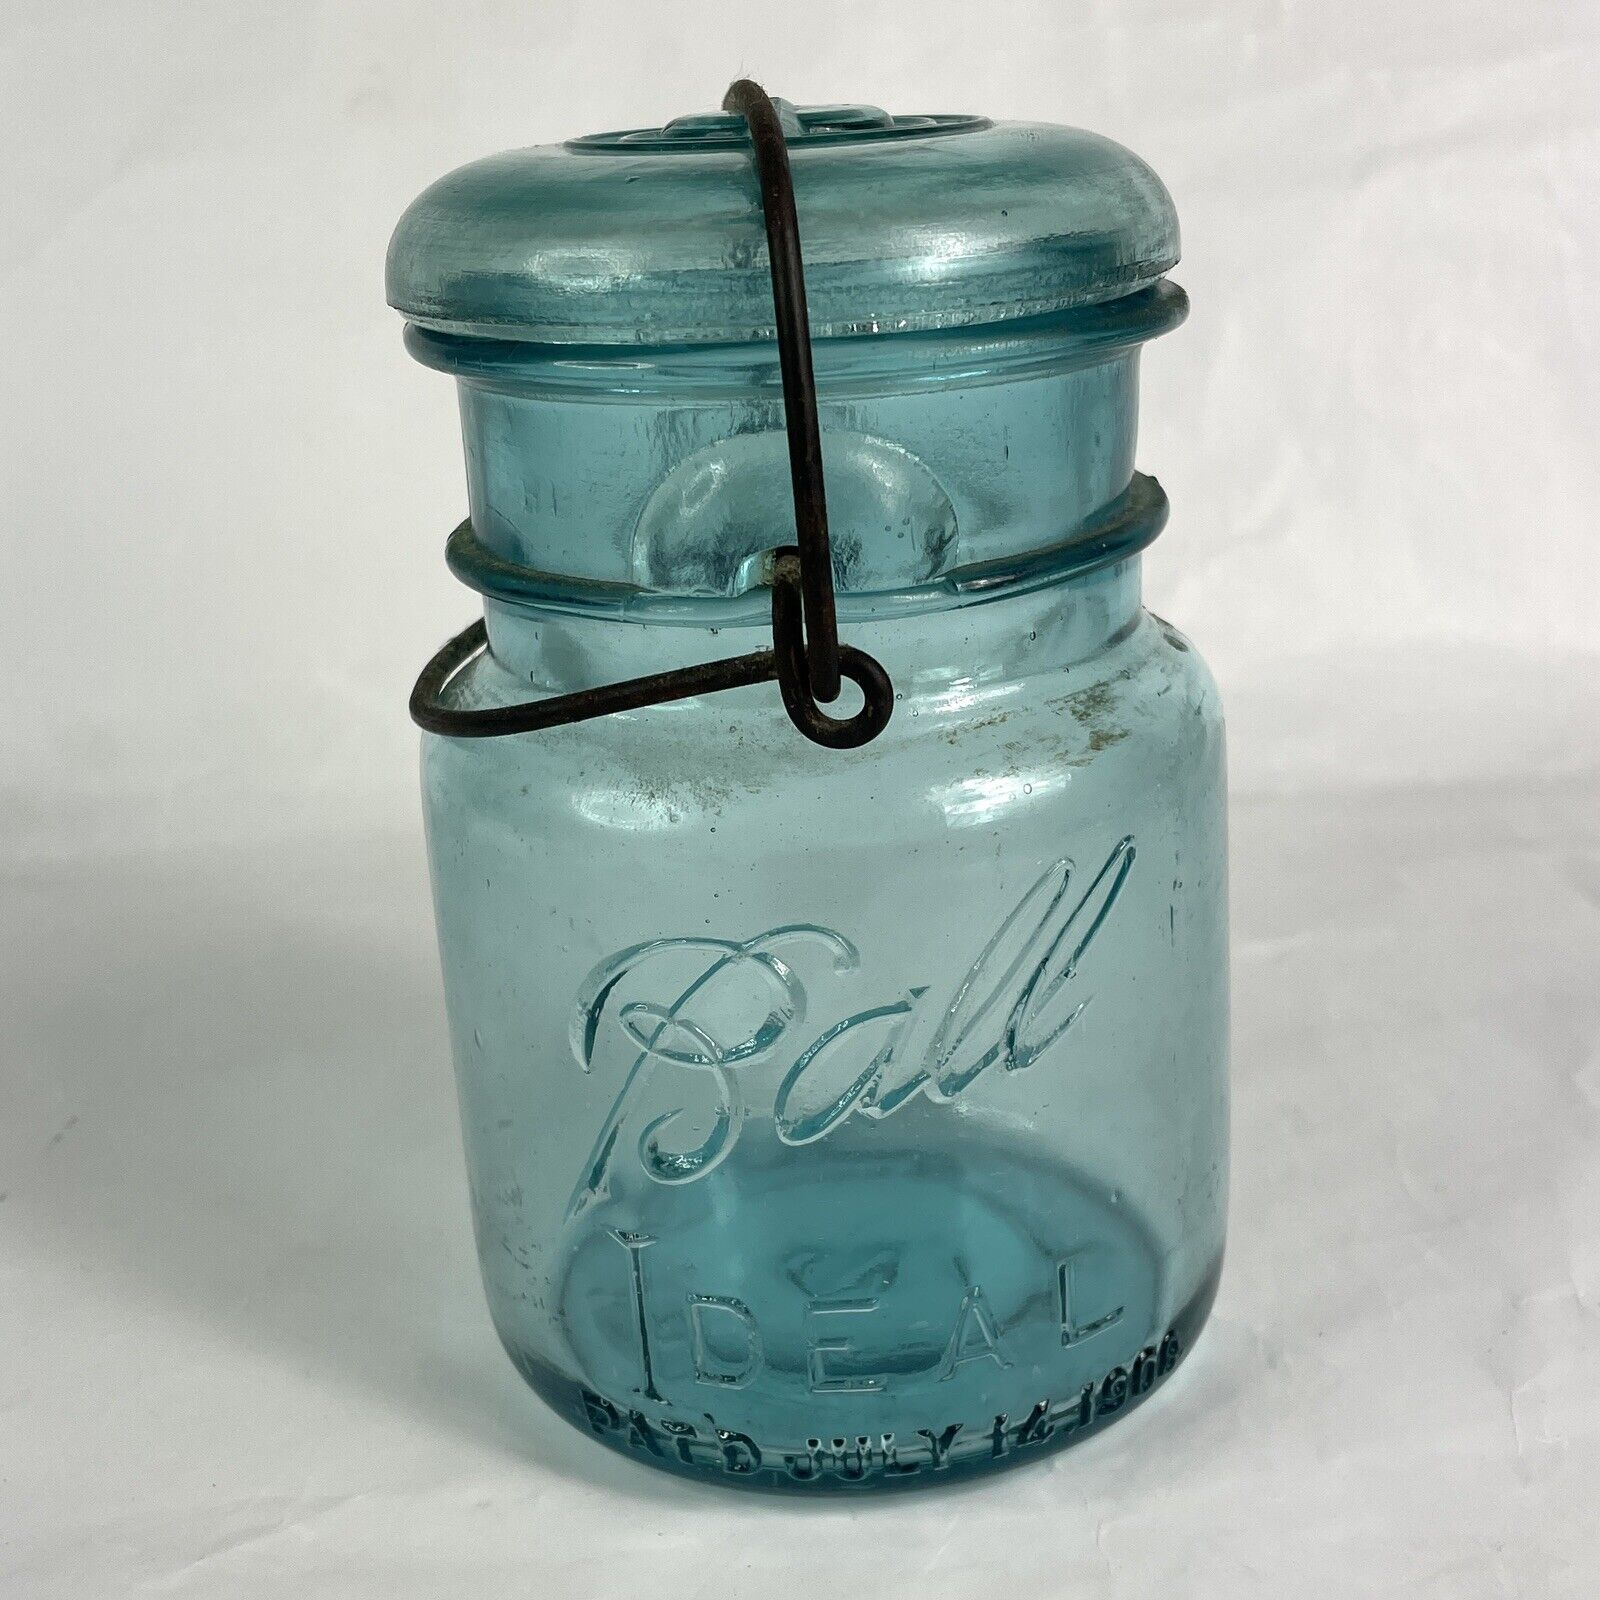 Vintage Ball Ideal Mason Jar - July 14 1908 - Blue Glass - 1 Pint No. 2